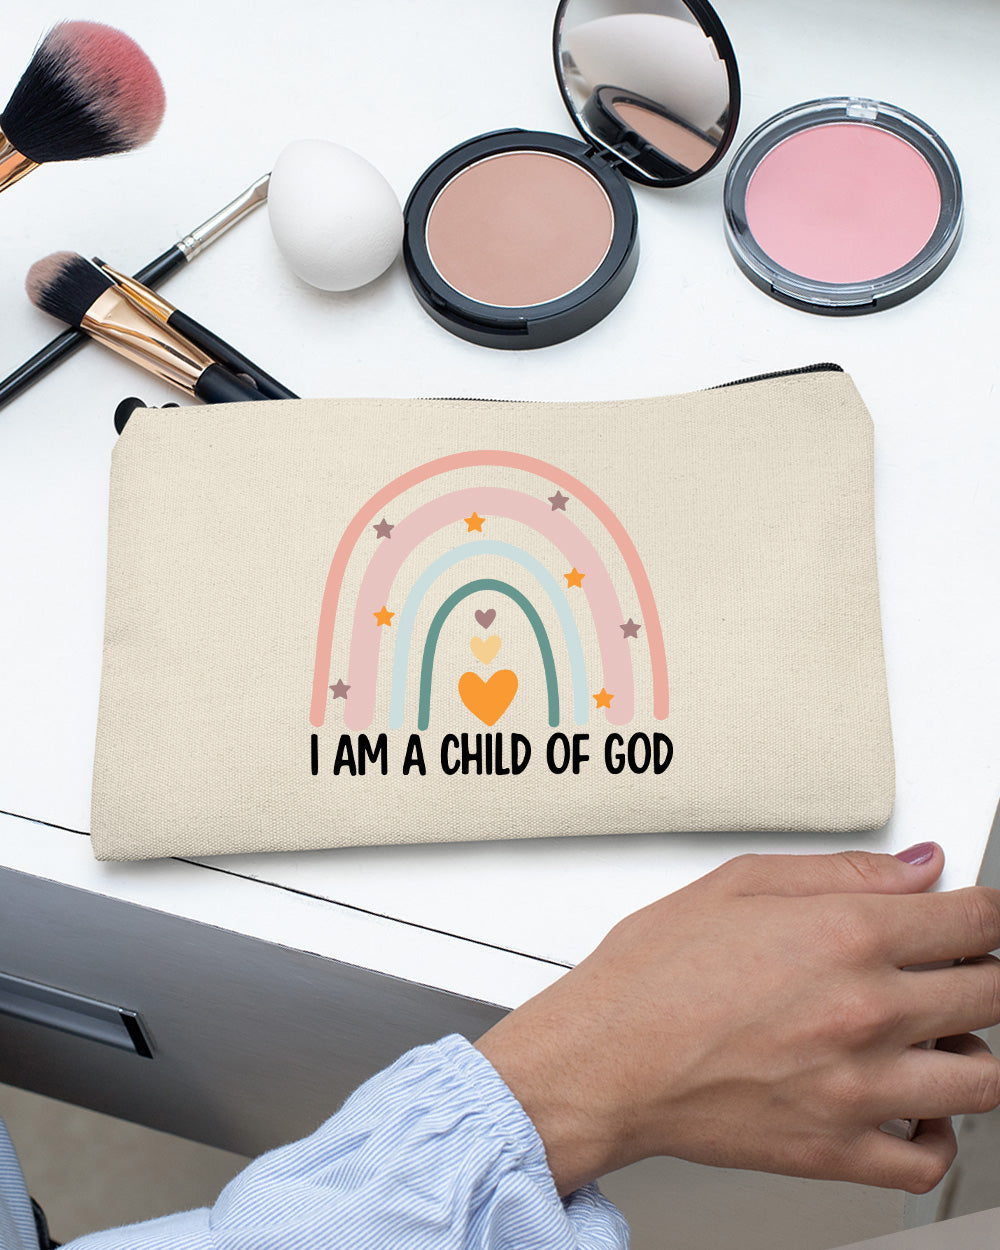 I'm a Child of God Christian Makeup Bag